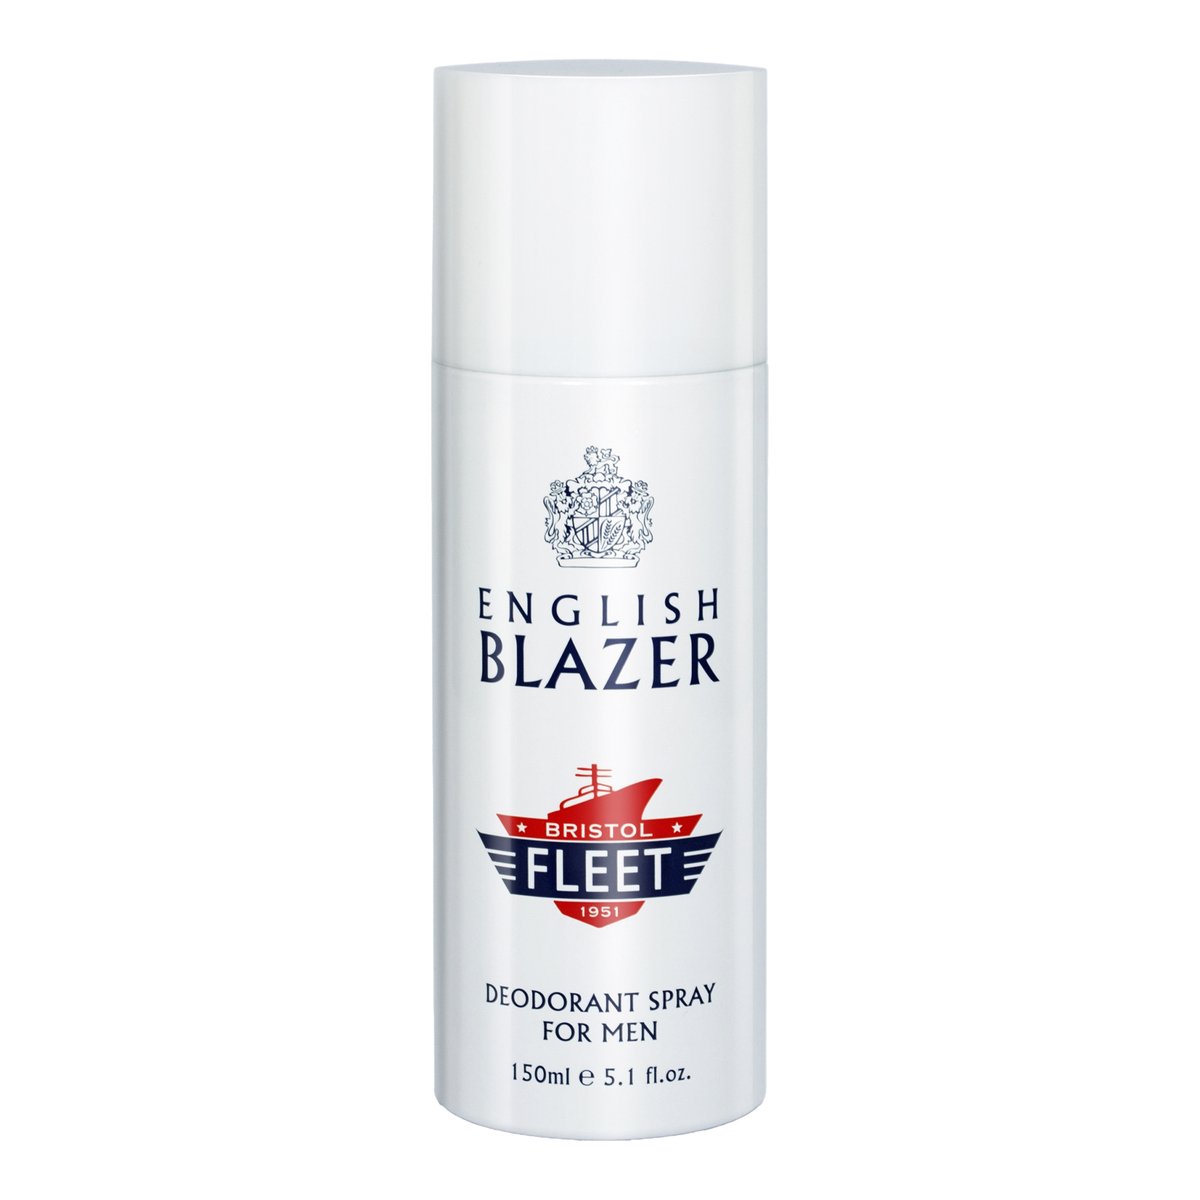 English Blazer Fleet Deodorant Spray For Men 150 ml